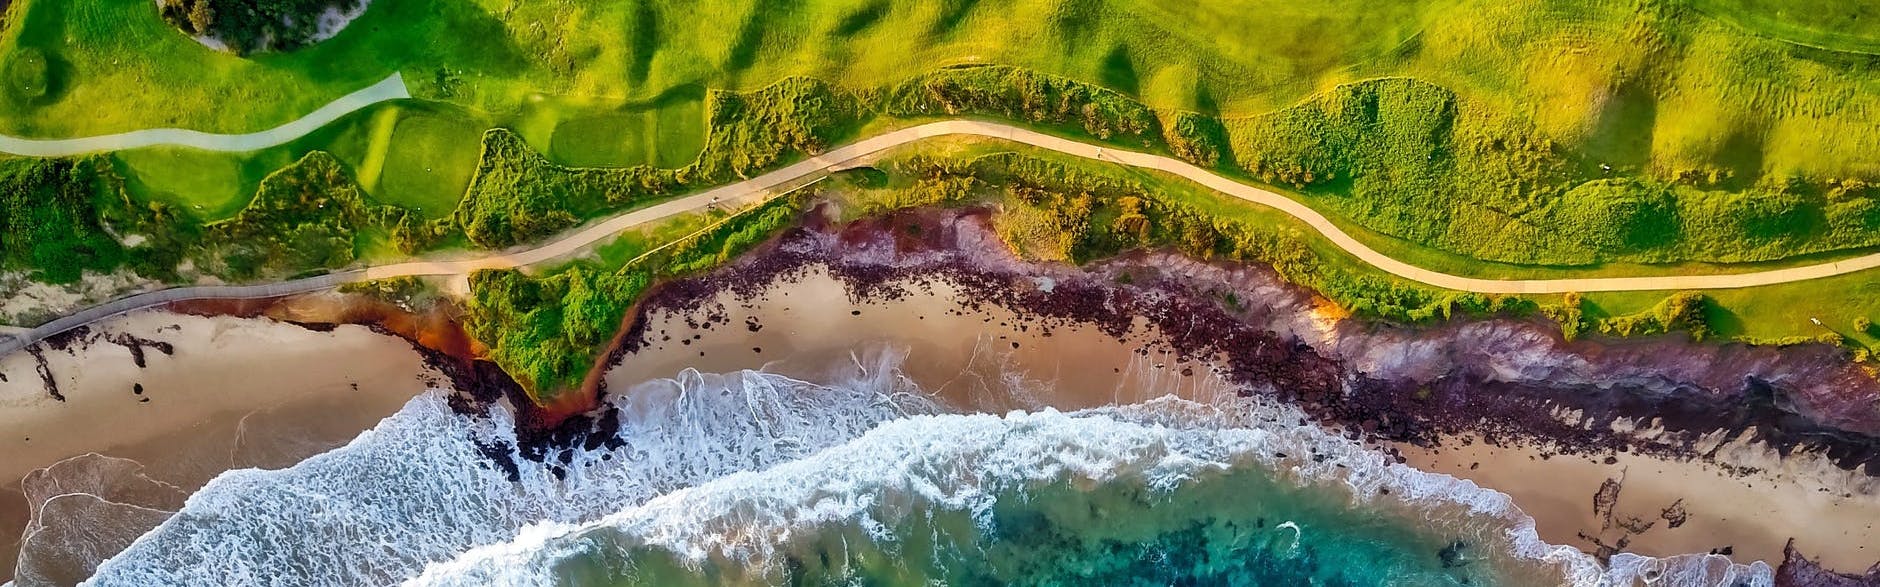 The edge of a golf course meets the ocean